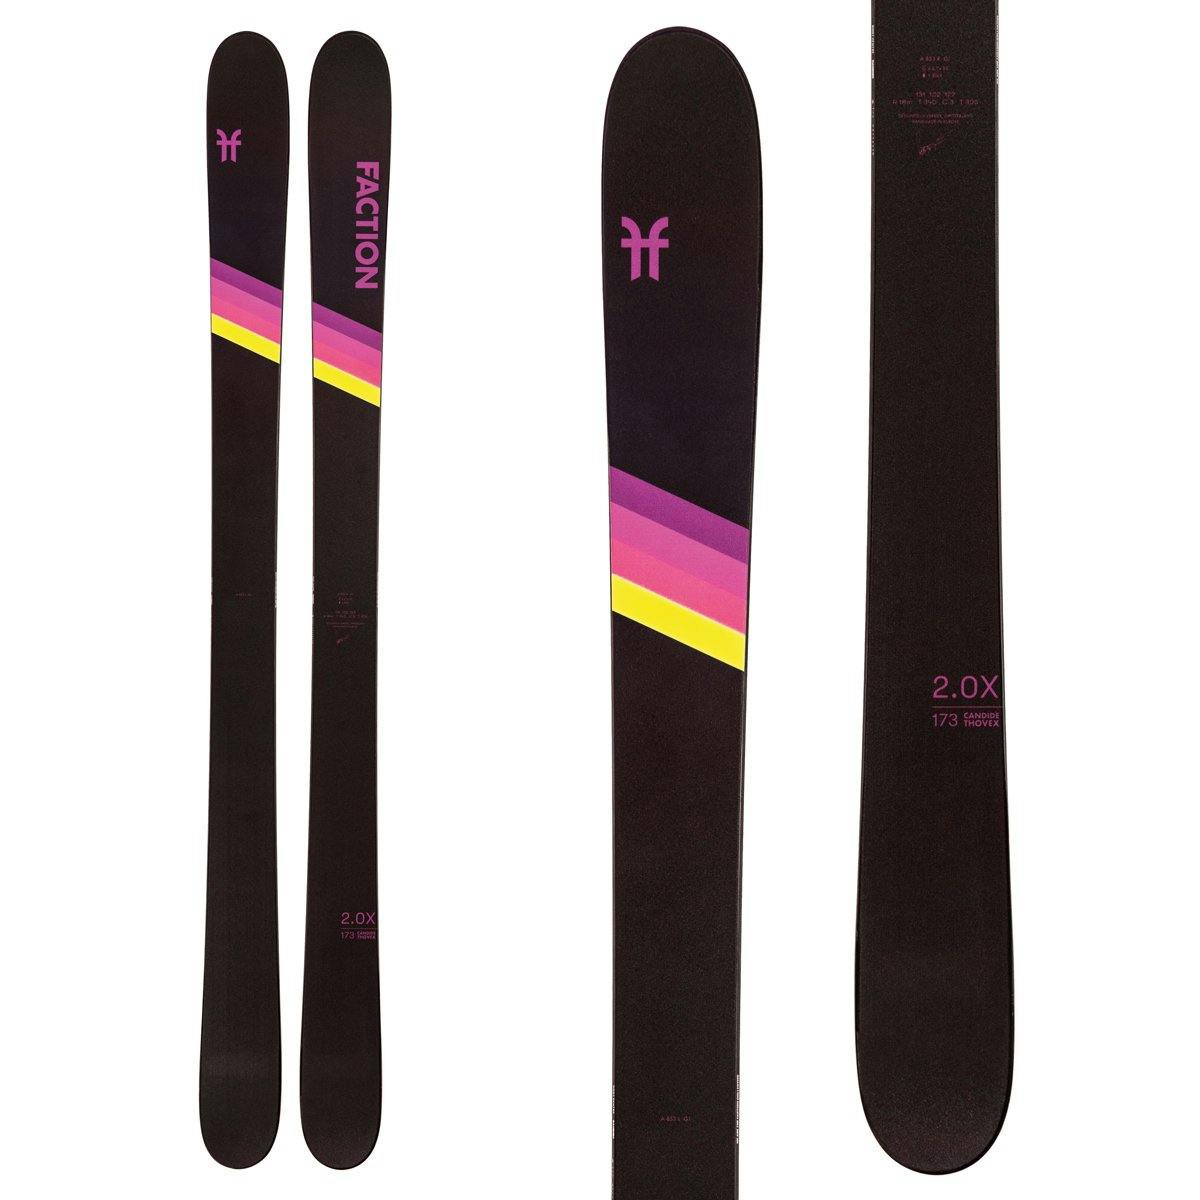 Faction Ski Candide 2.0 X Skis · Women's · 2021